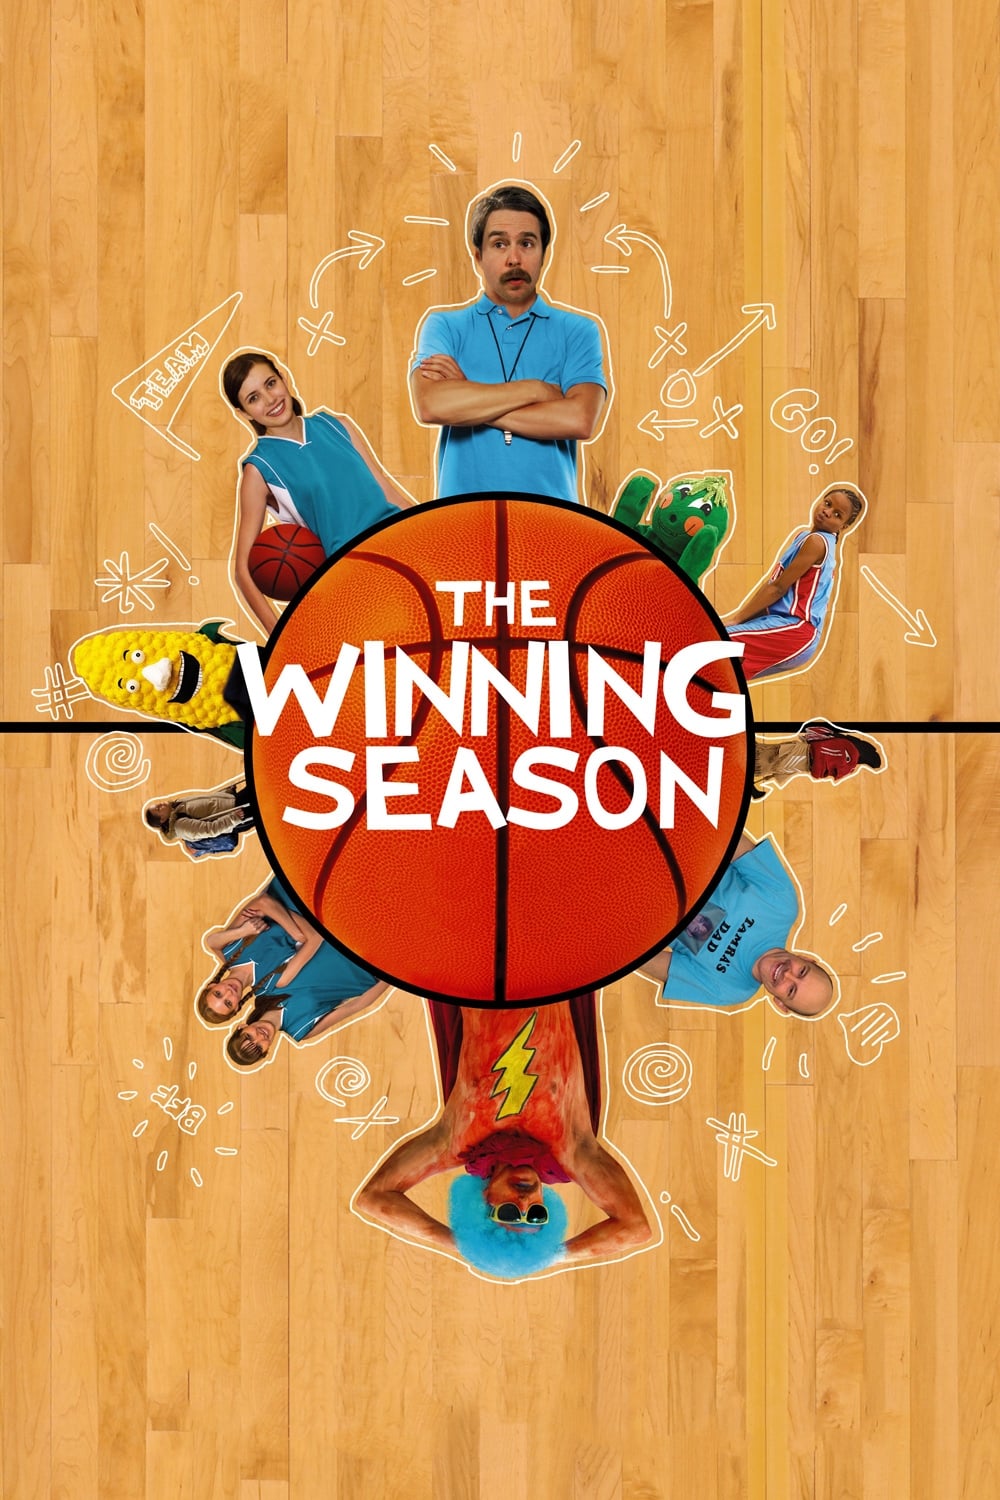 The Winning Season film